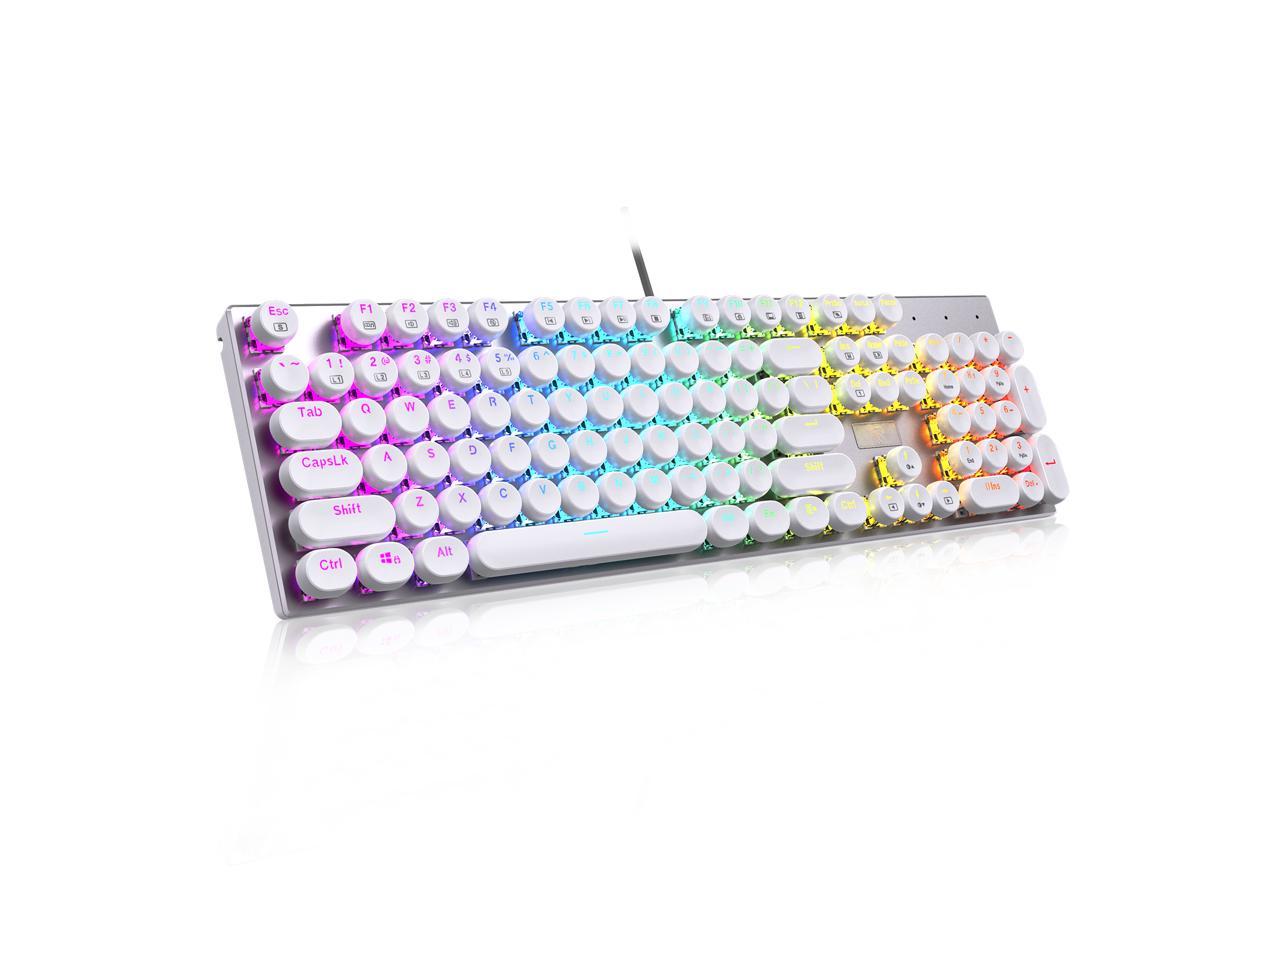 E-yooso K600 Retro Mechanical Gaming Keyboard 104 Key LED Backlit Keyboard Blue for sale online 